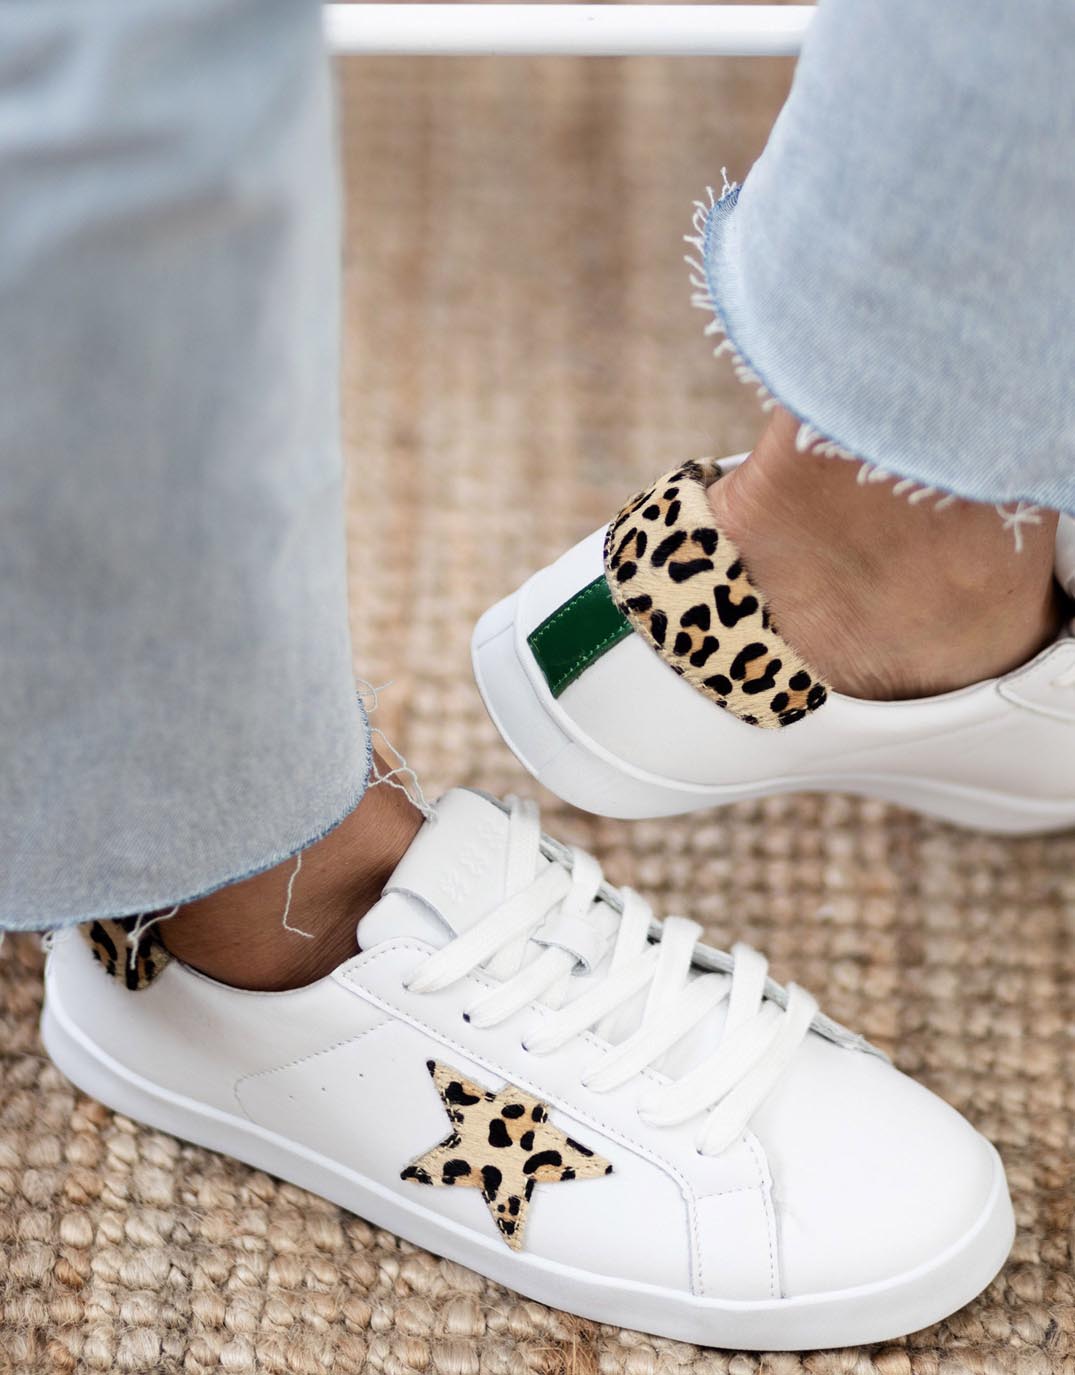 Brooklyn Leather Sneakers - White/Leopard/Emerald